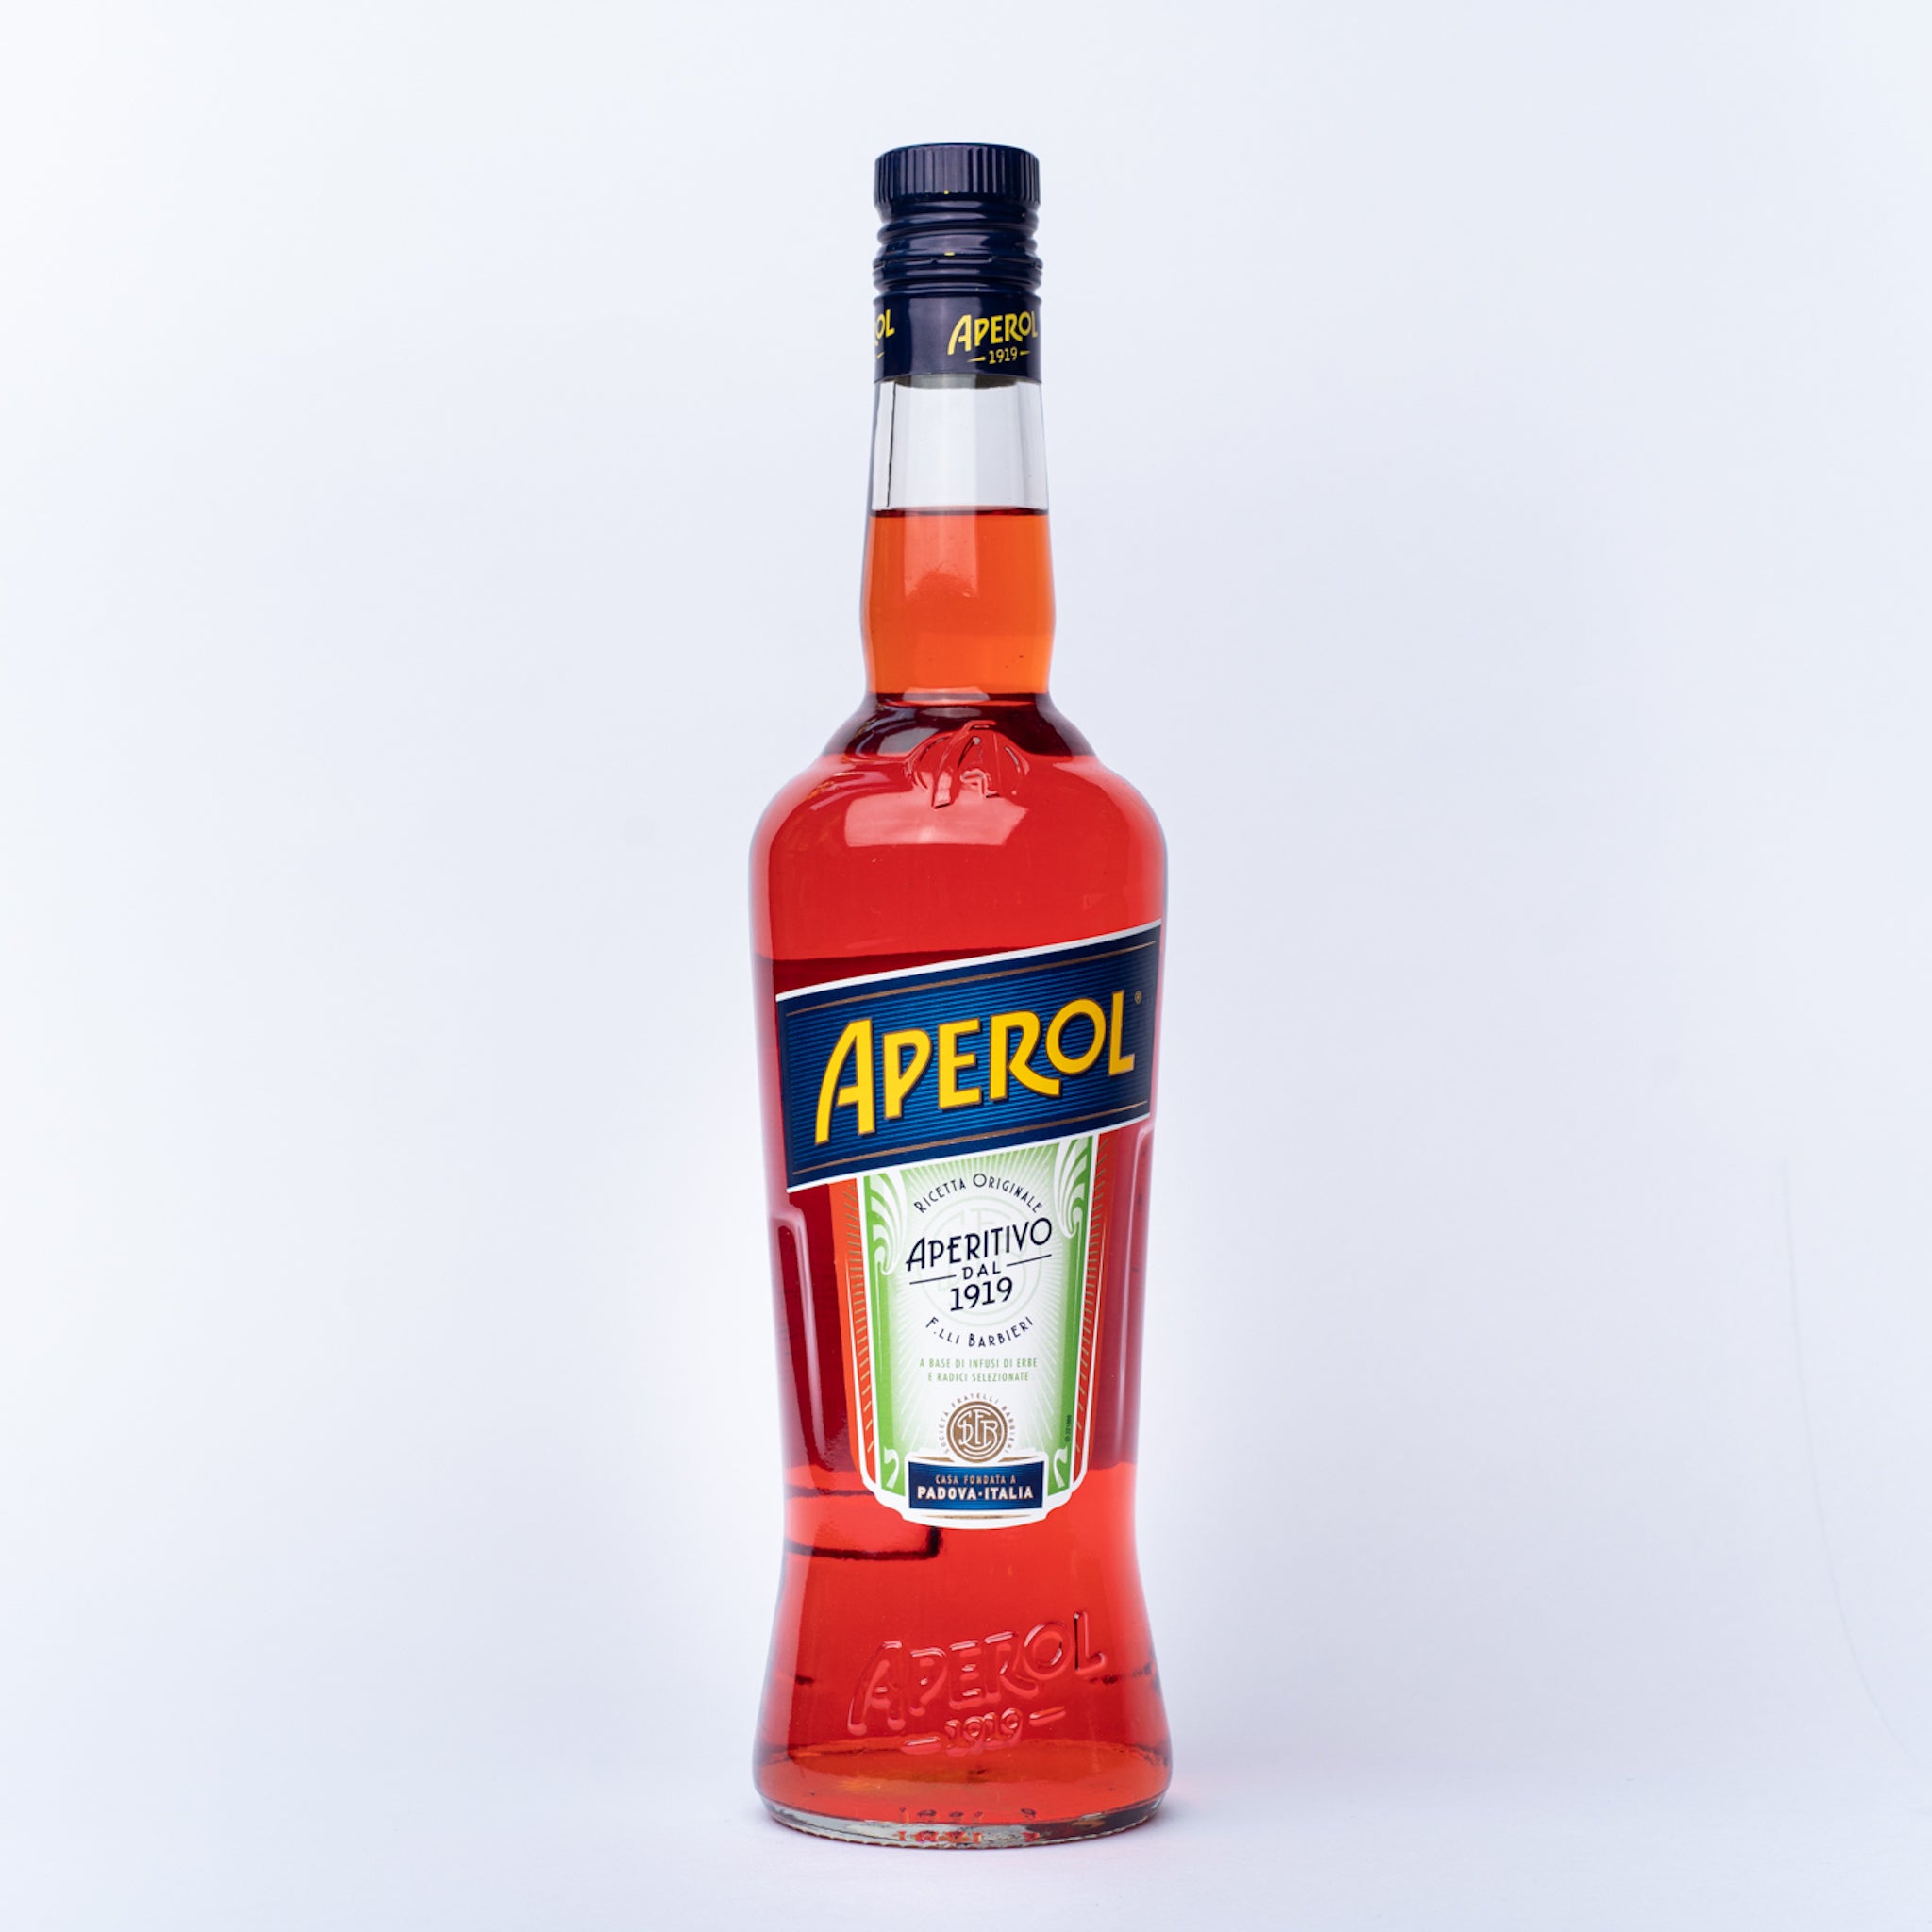 a 700ml bottle of Aperol red spirit.